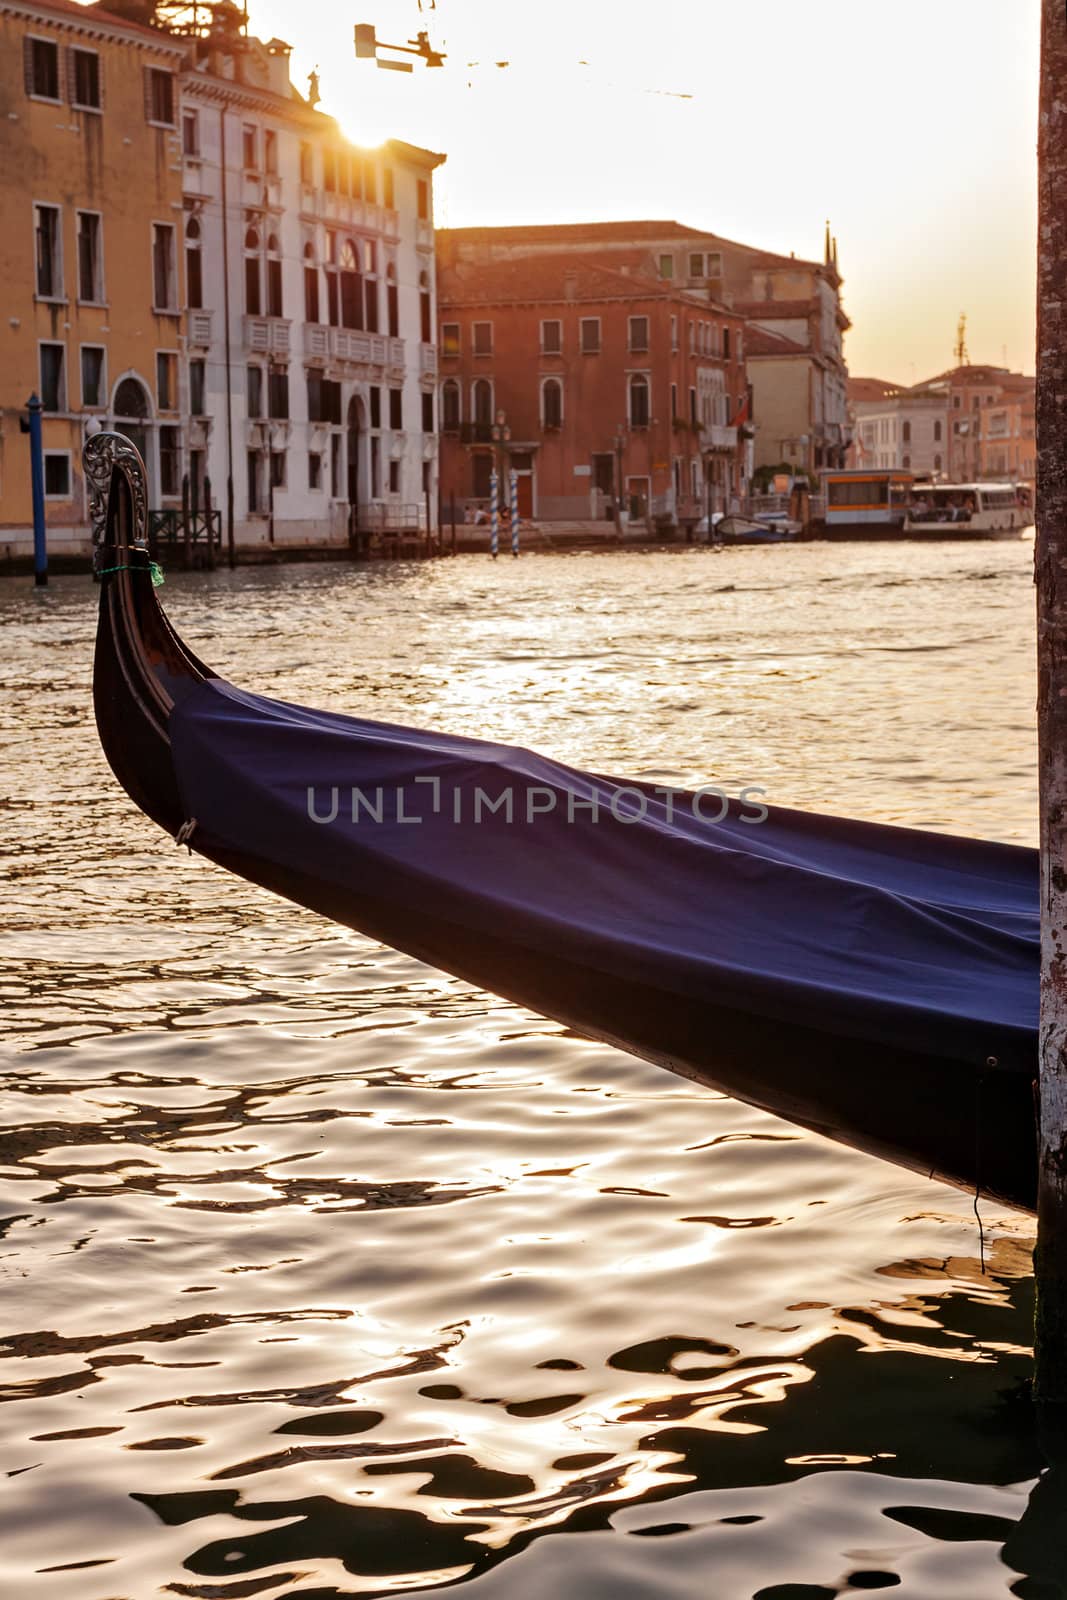 Venice canal with boats by Roka